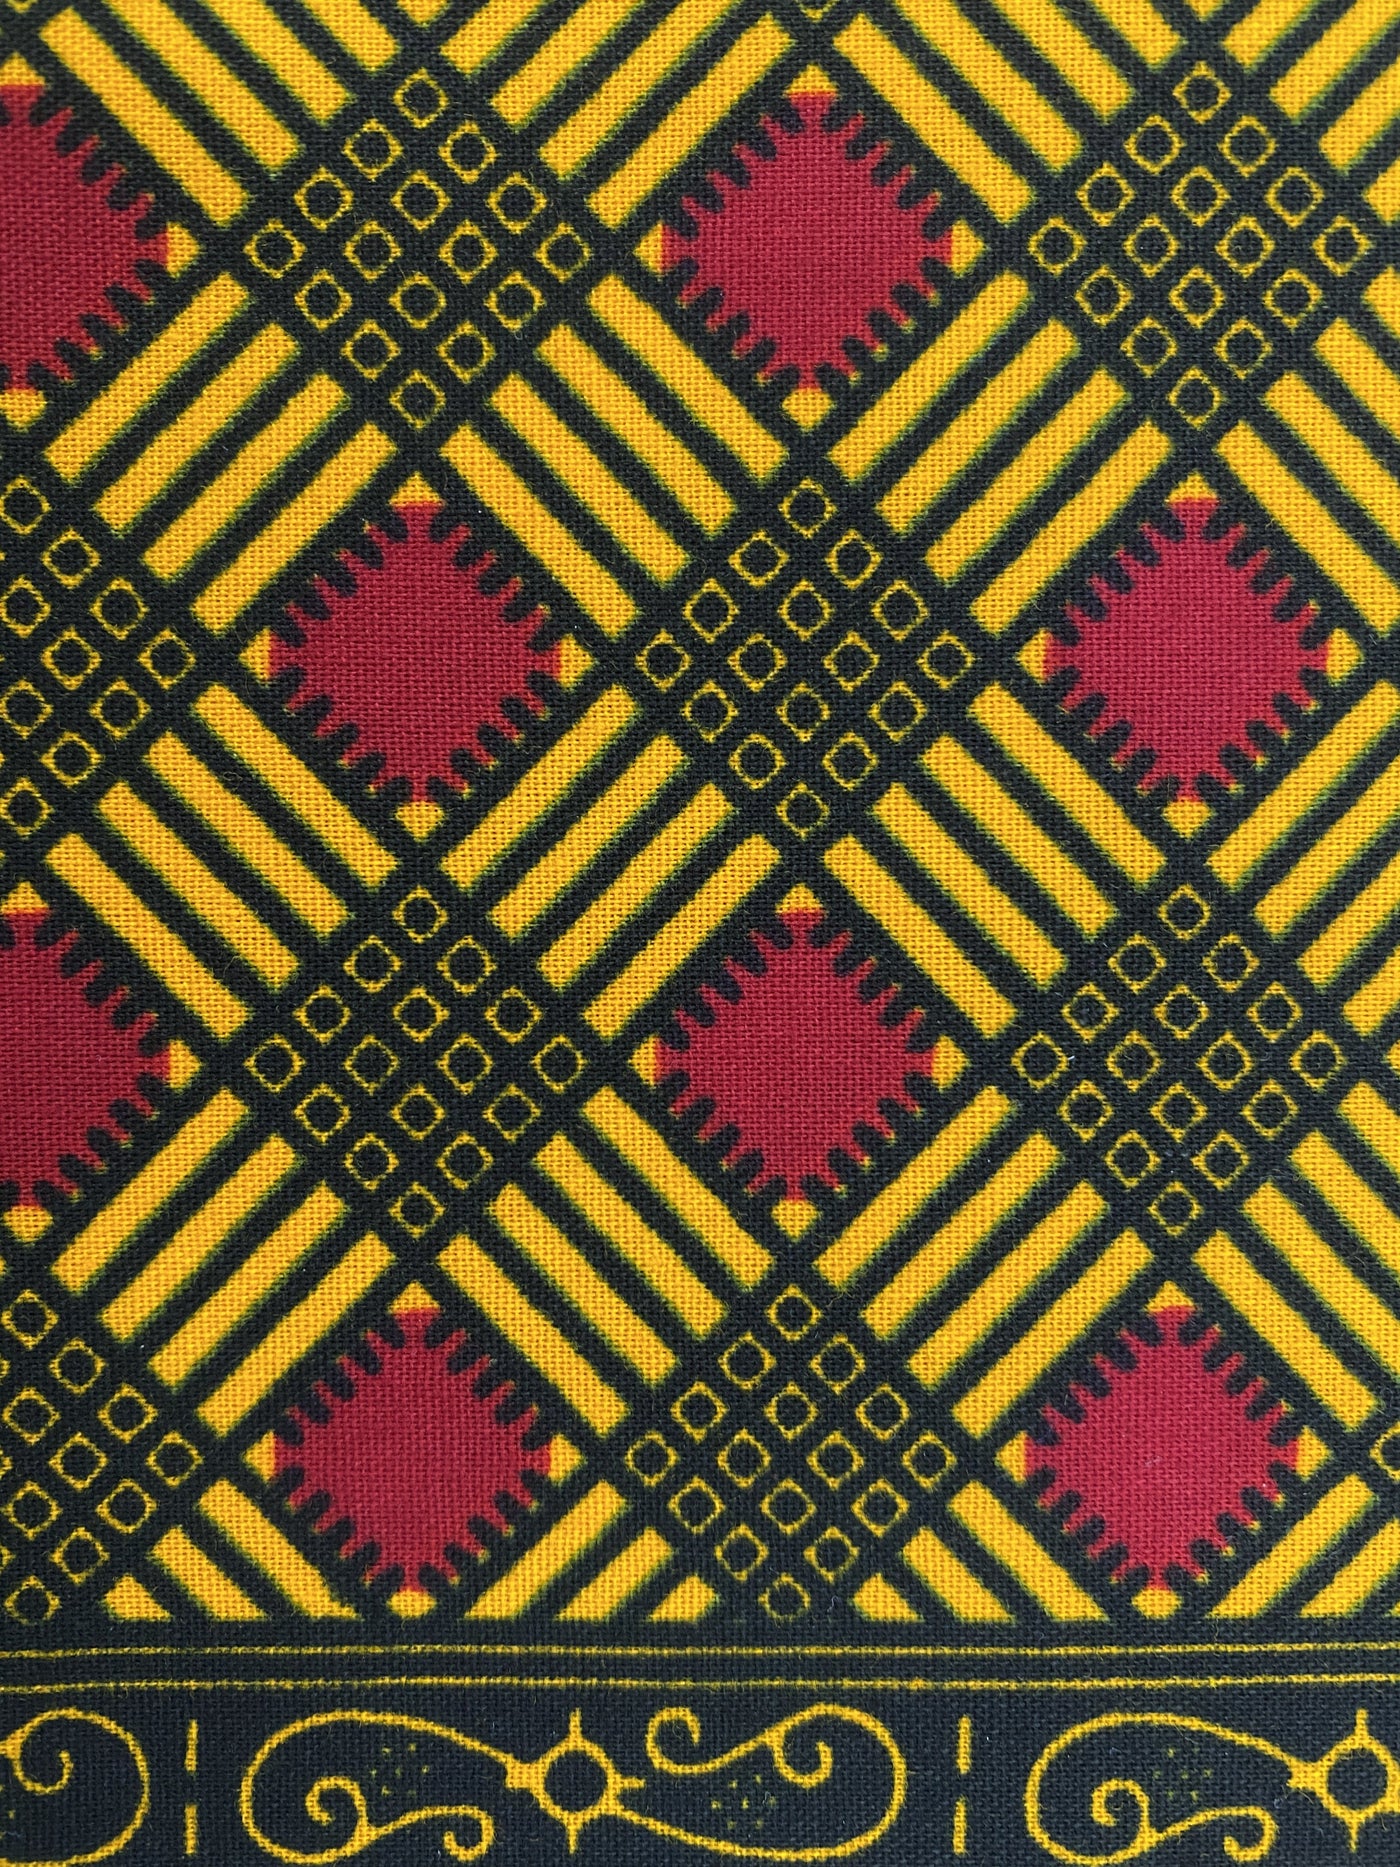 Ankara Fabric - 78516-6